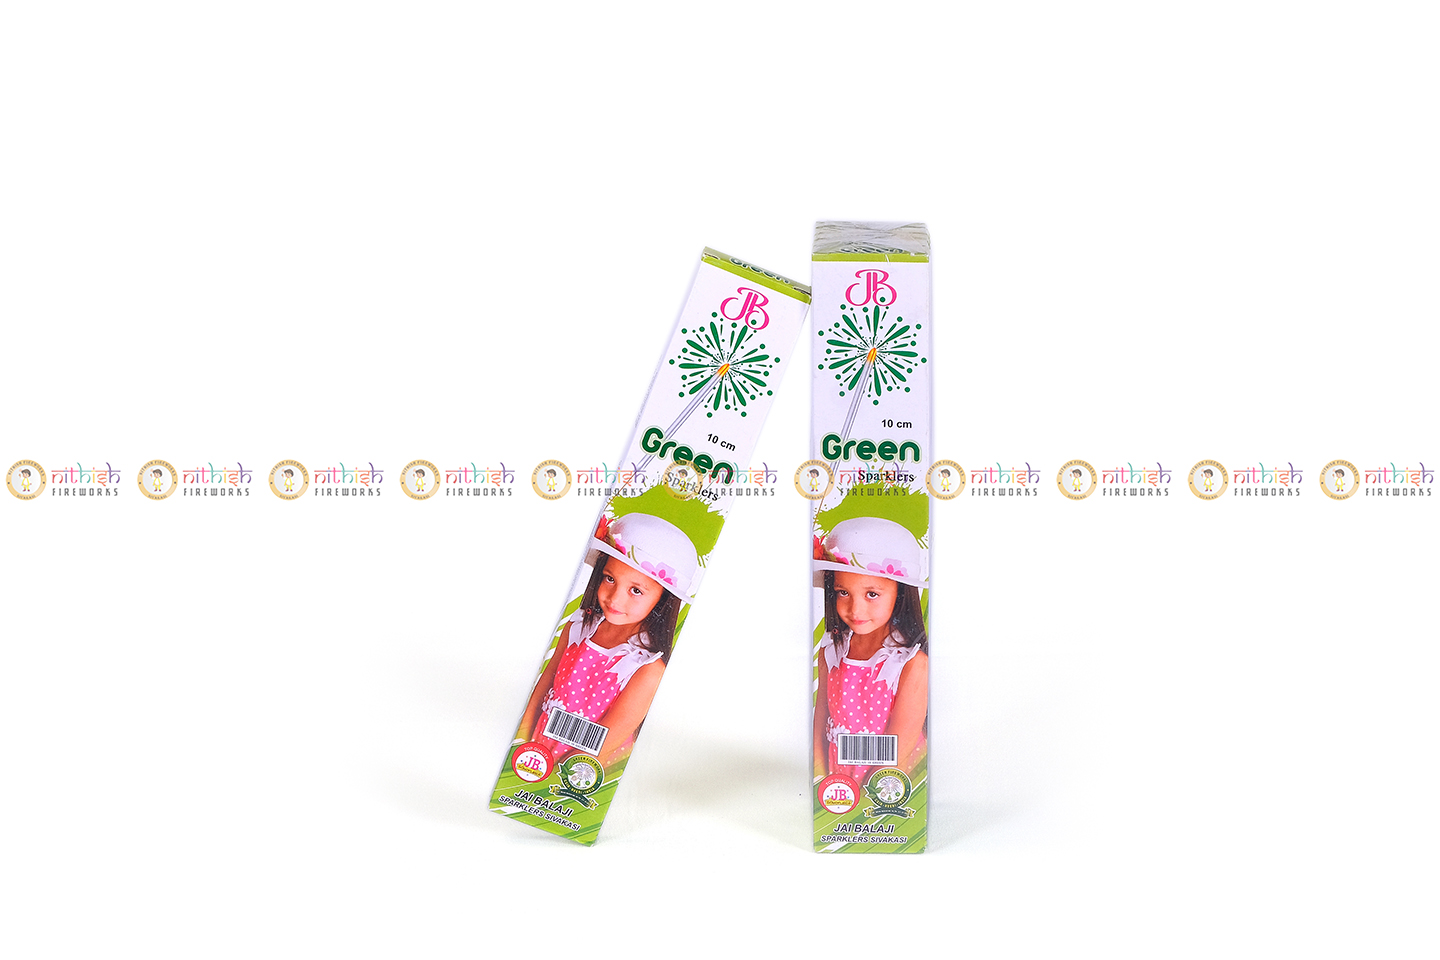 10 Cm Green Sparklers